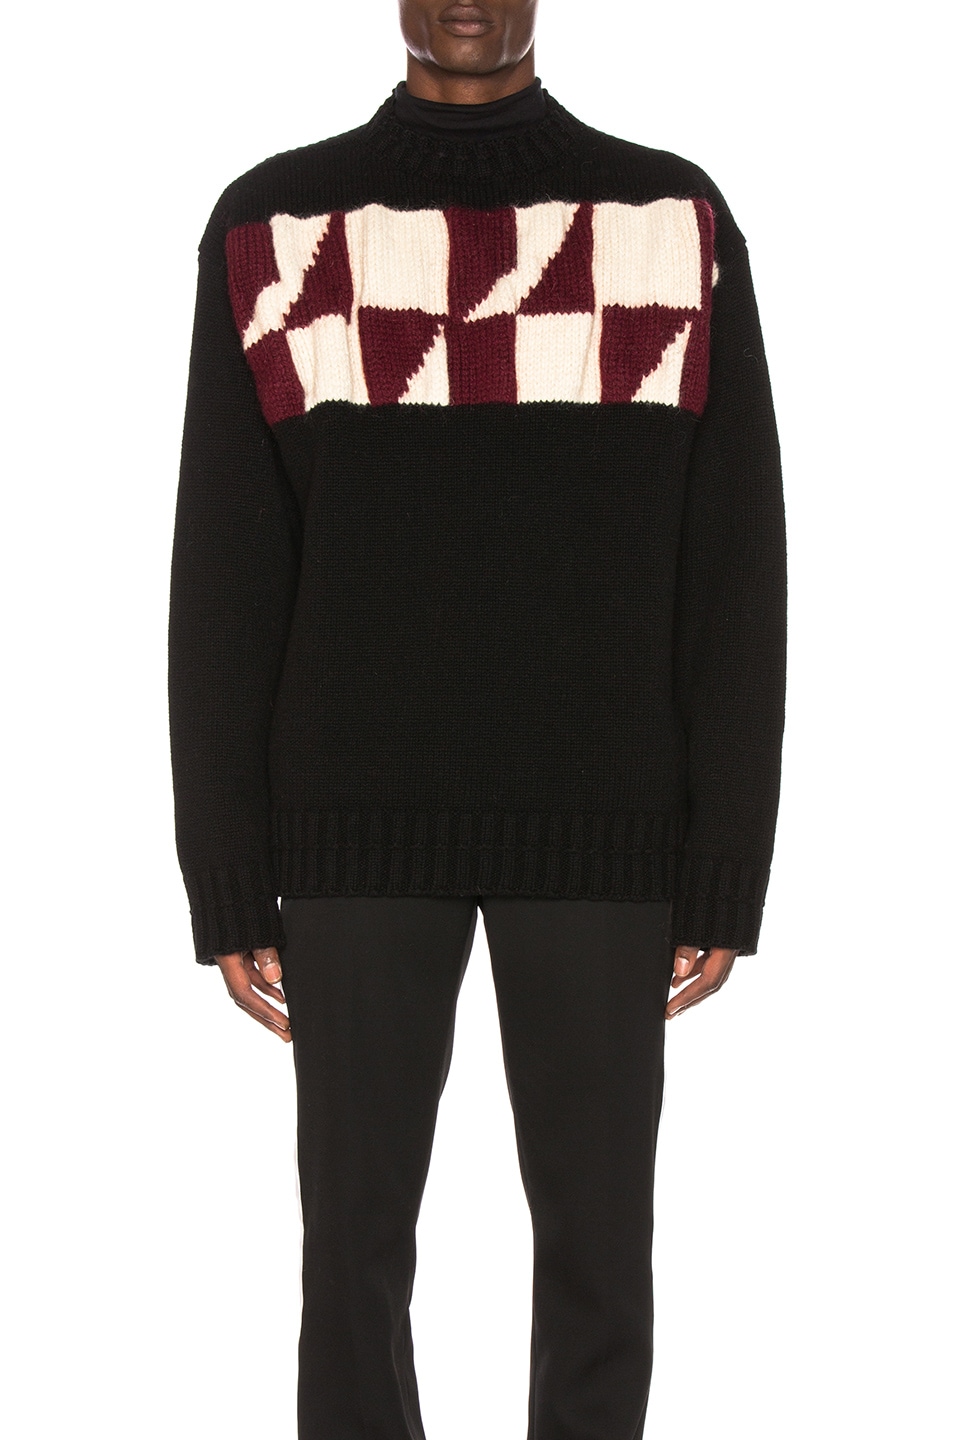 Image 1 of CALVIN KLEIN 205W39NYC Chest Graphic Sweater in Black & Burgundy & Ecru